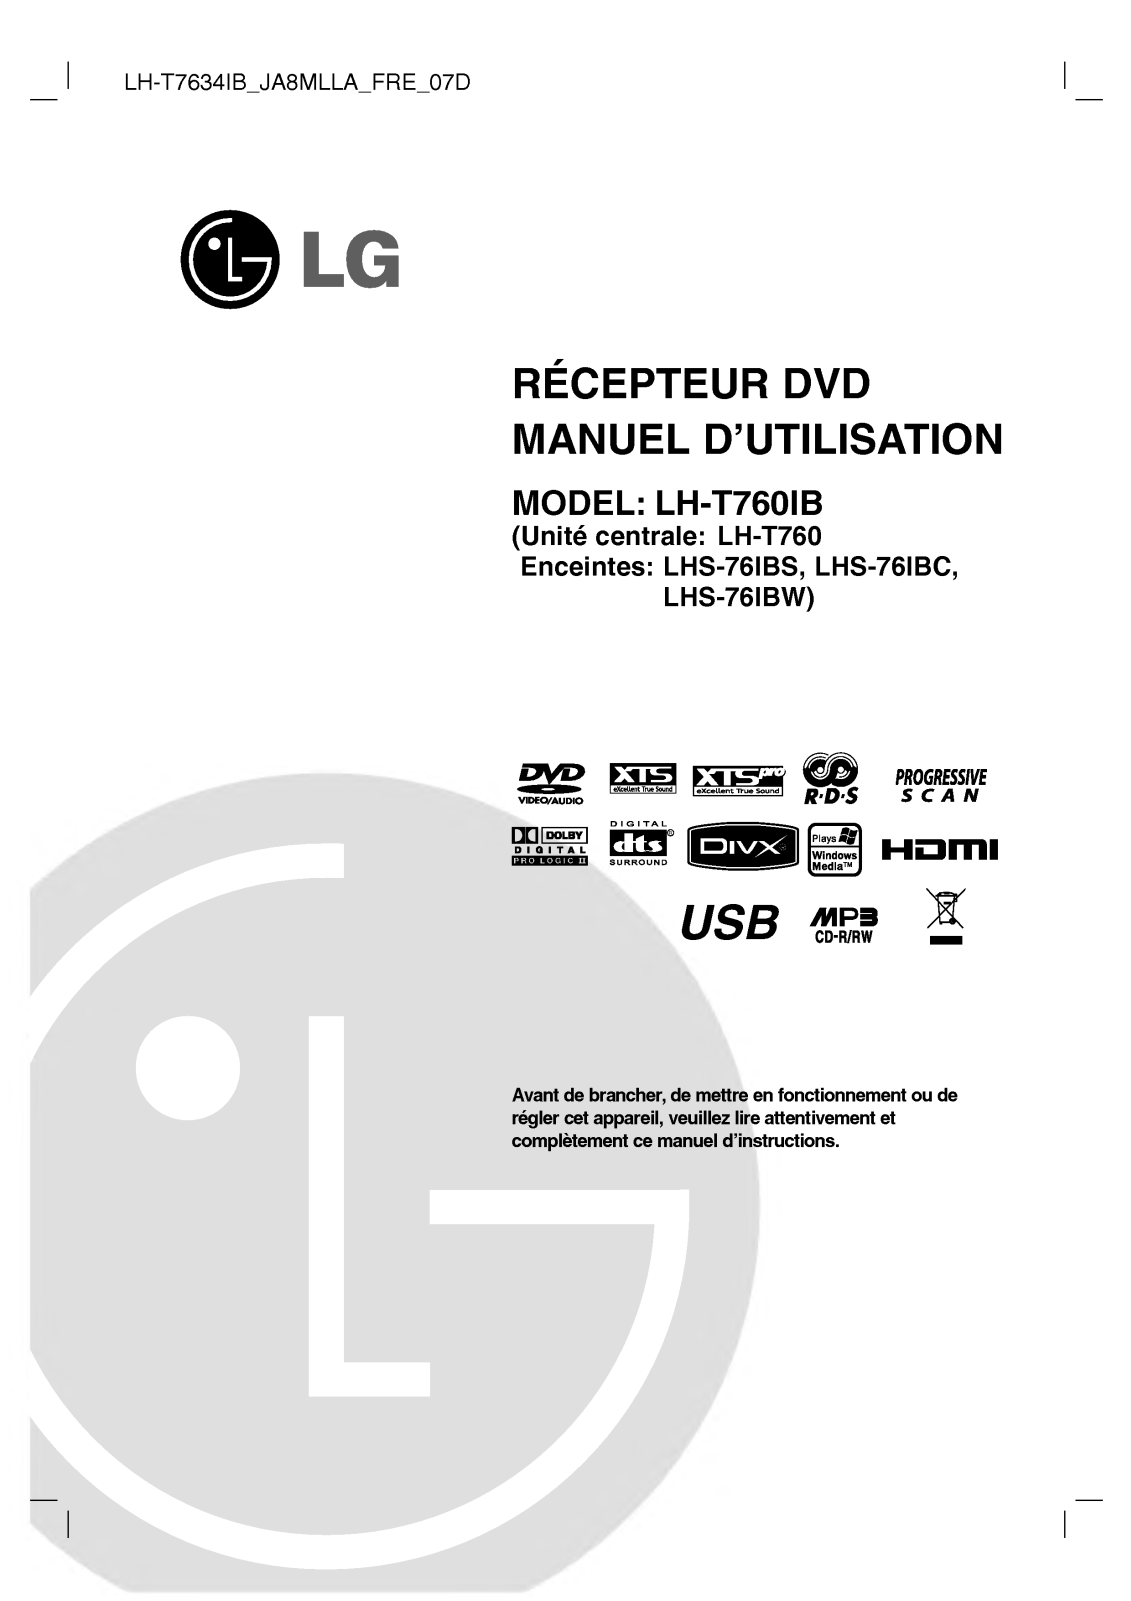 LG LH-T760 User Manual